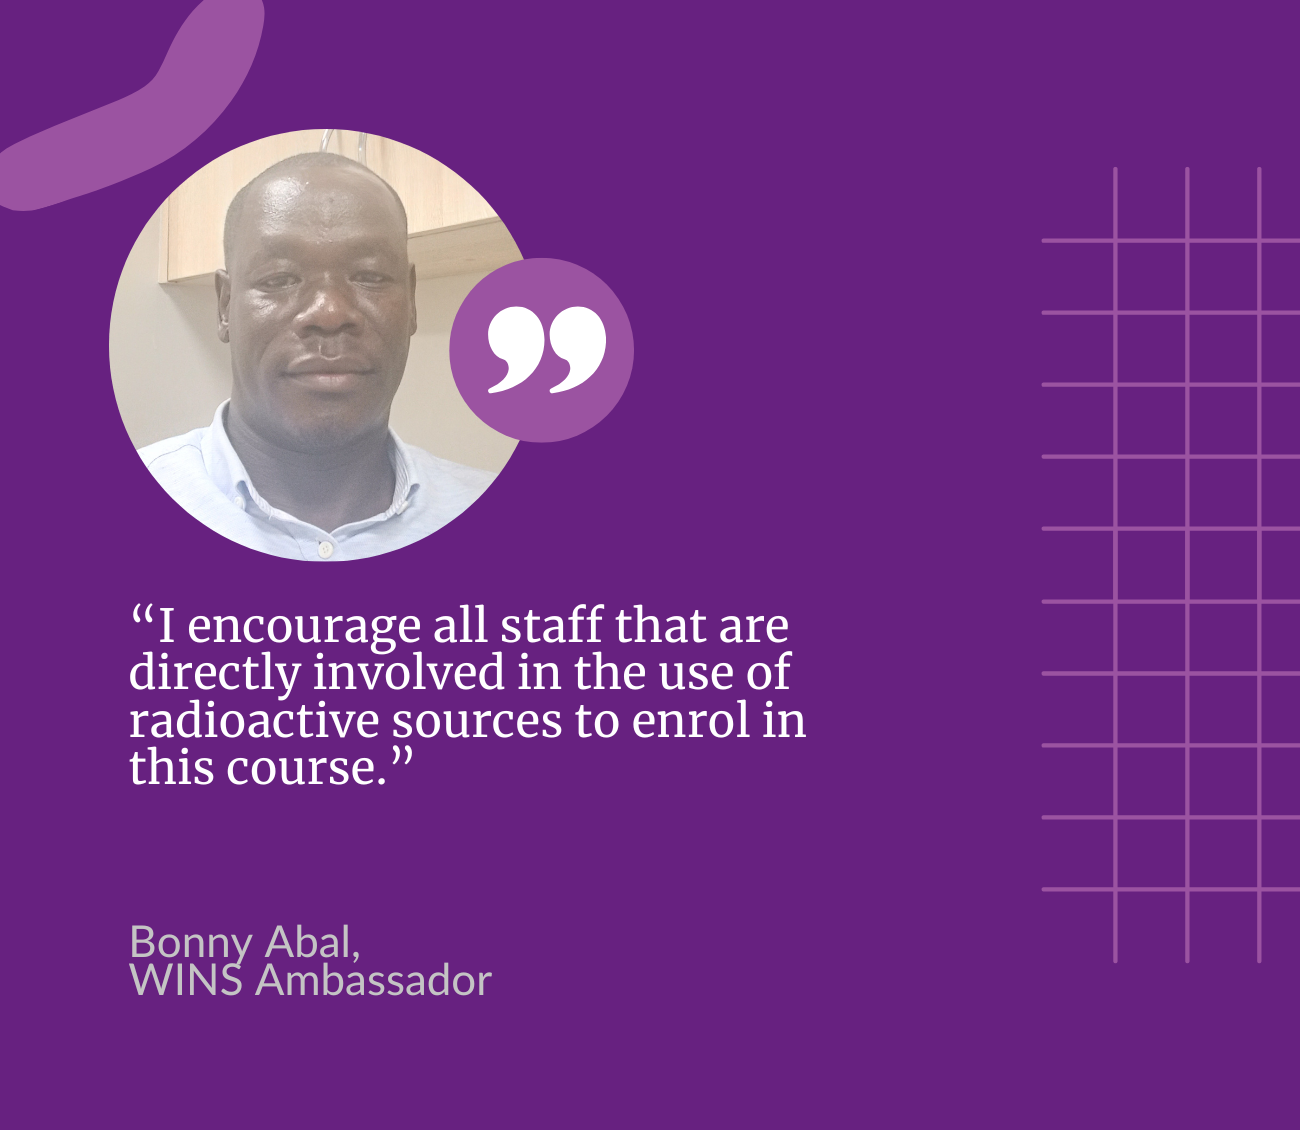 Meet a WINS Ambassador: Bonny Abal